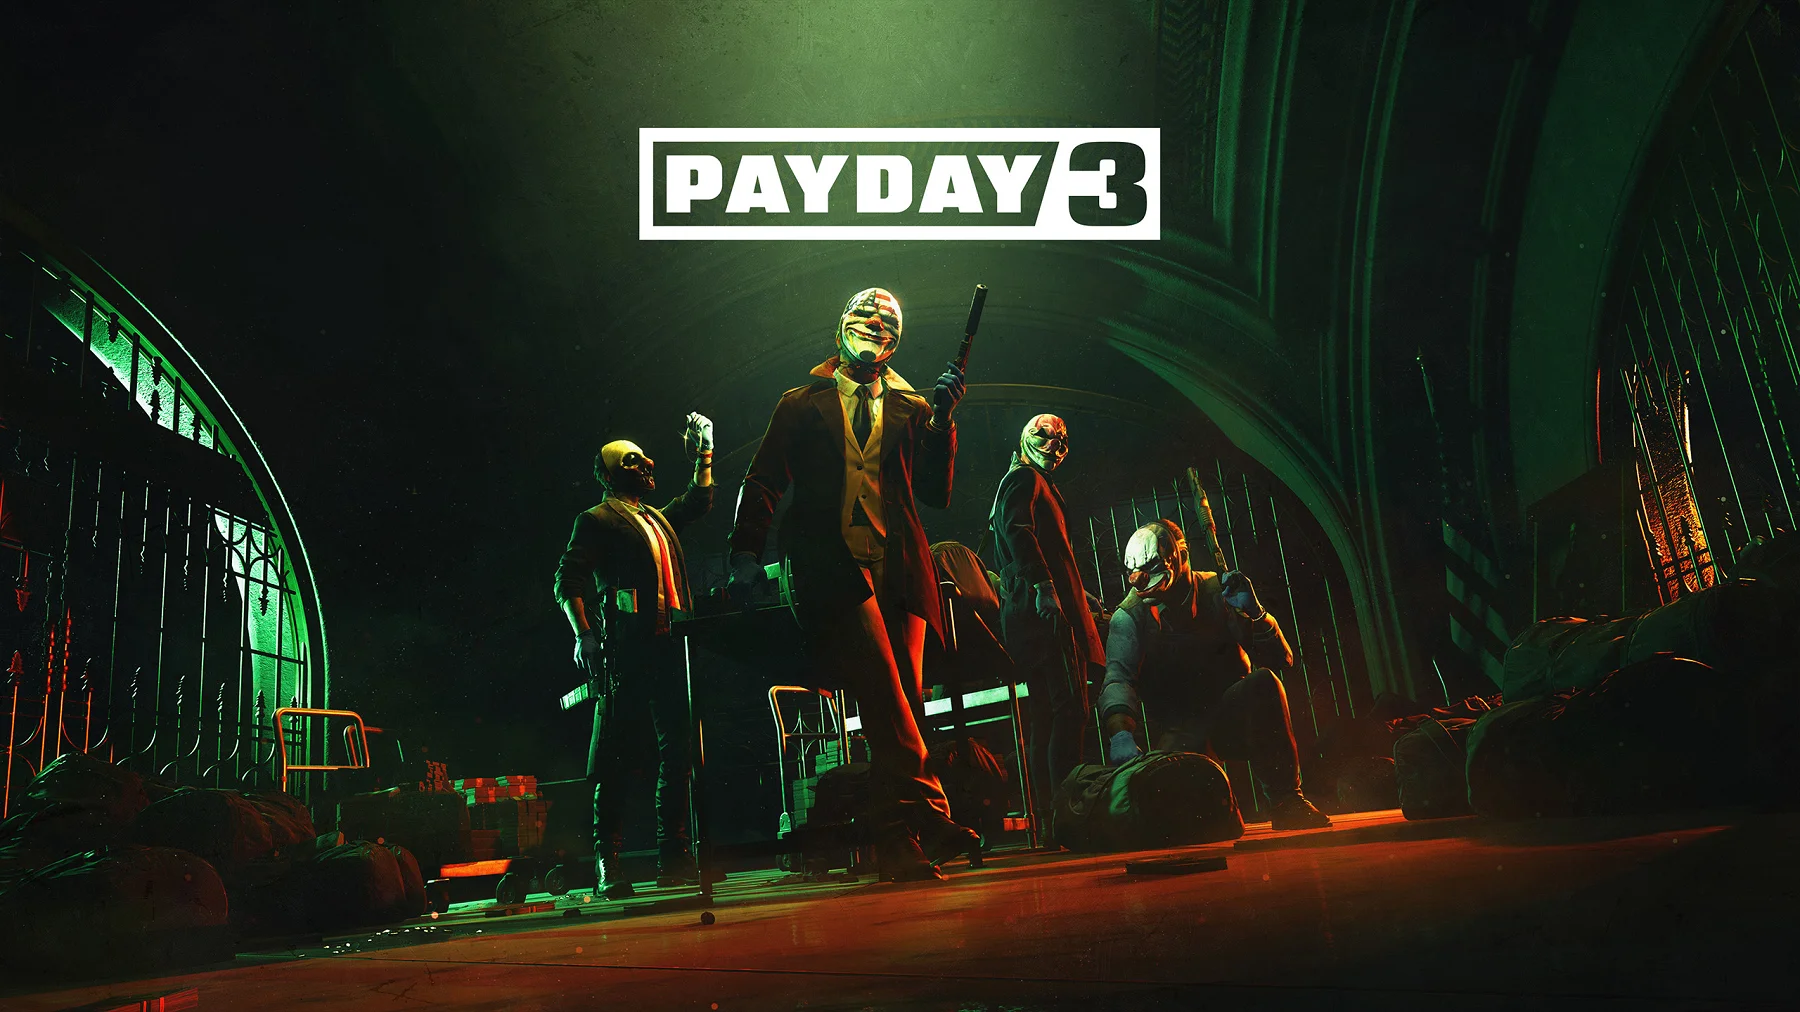 В базе данных EGS обнаружили официальный арт Payday 3 - фото 1